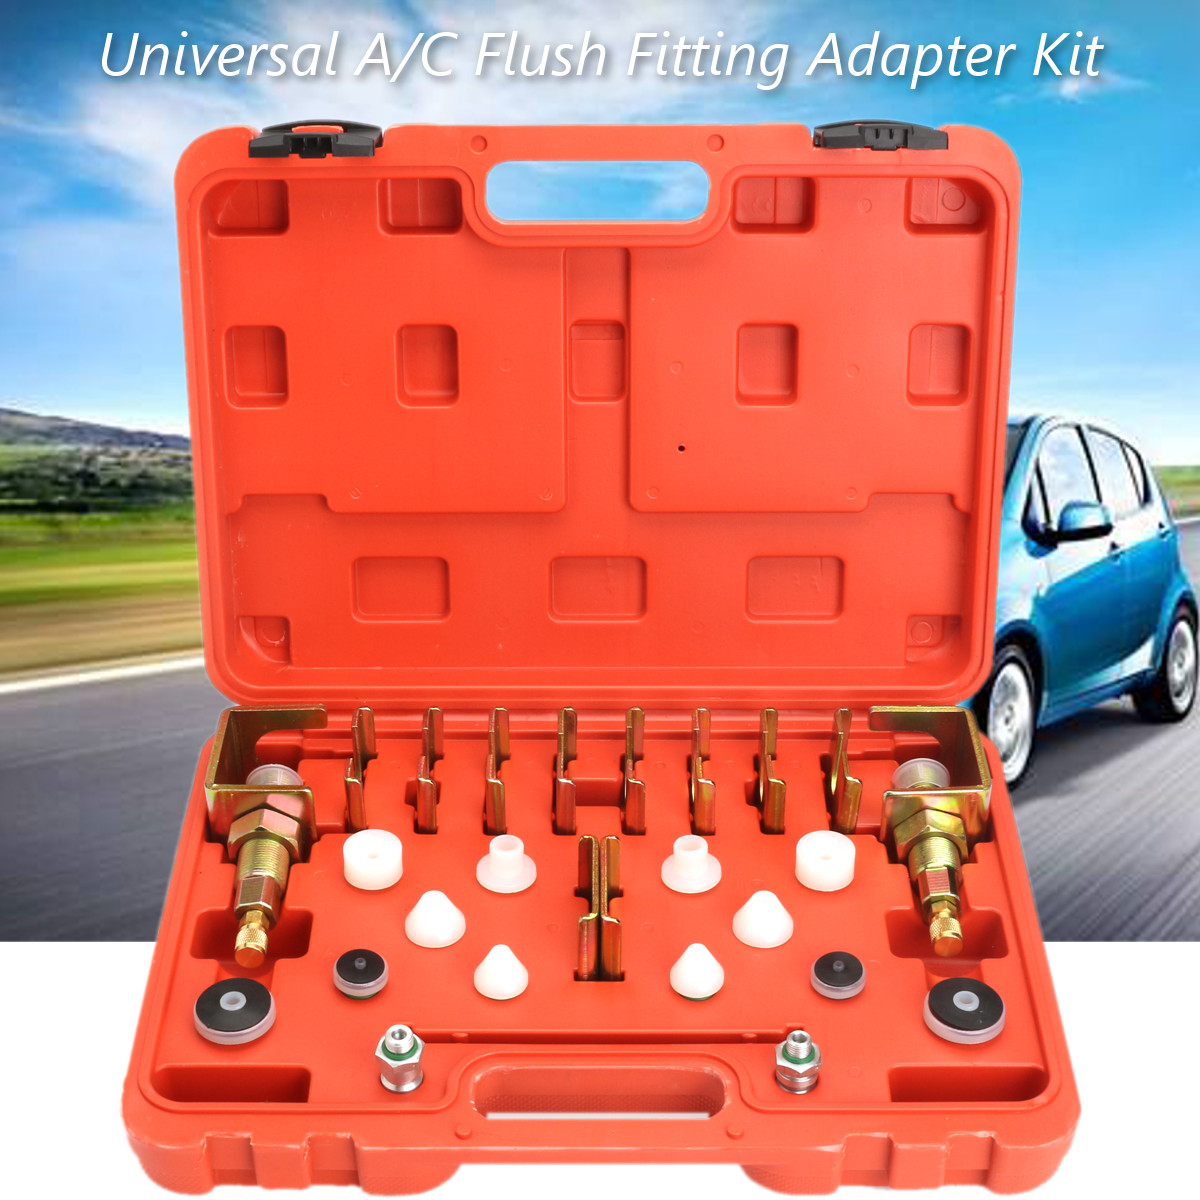 Universal-AC-Flush-Fitting-Adapter-Kit-Leak-Maintenance-Tools-Set-1255667-1